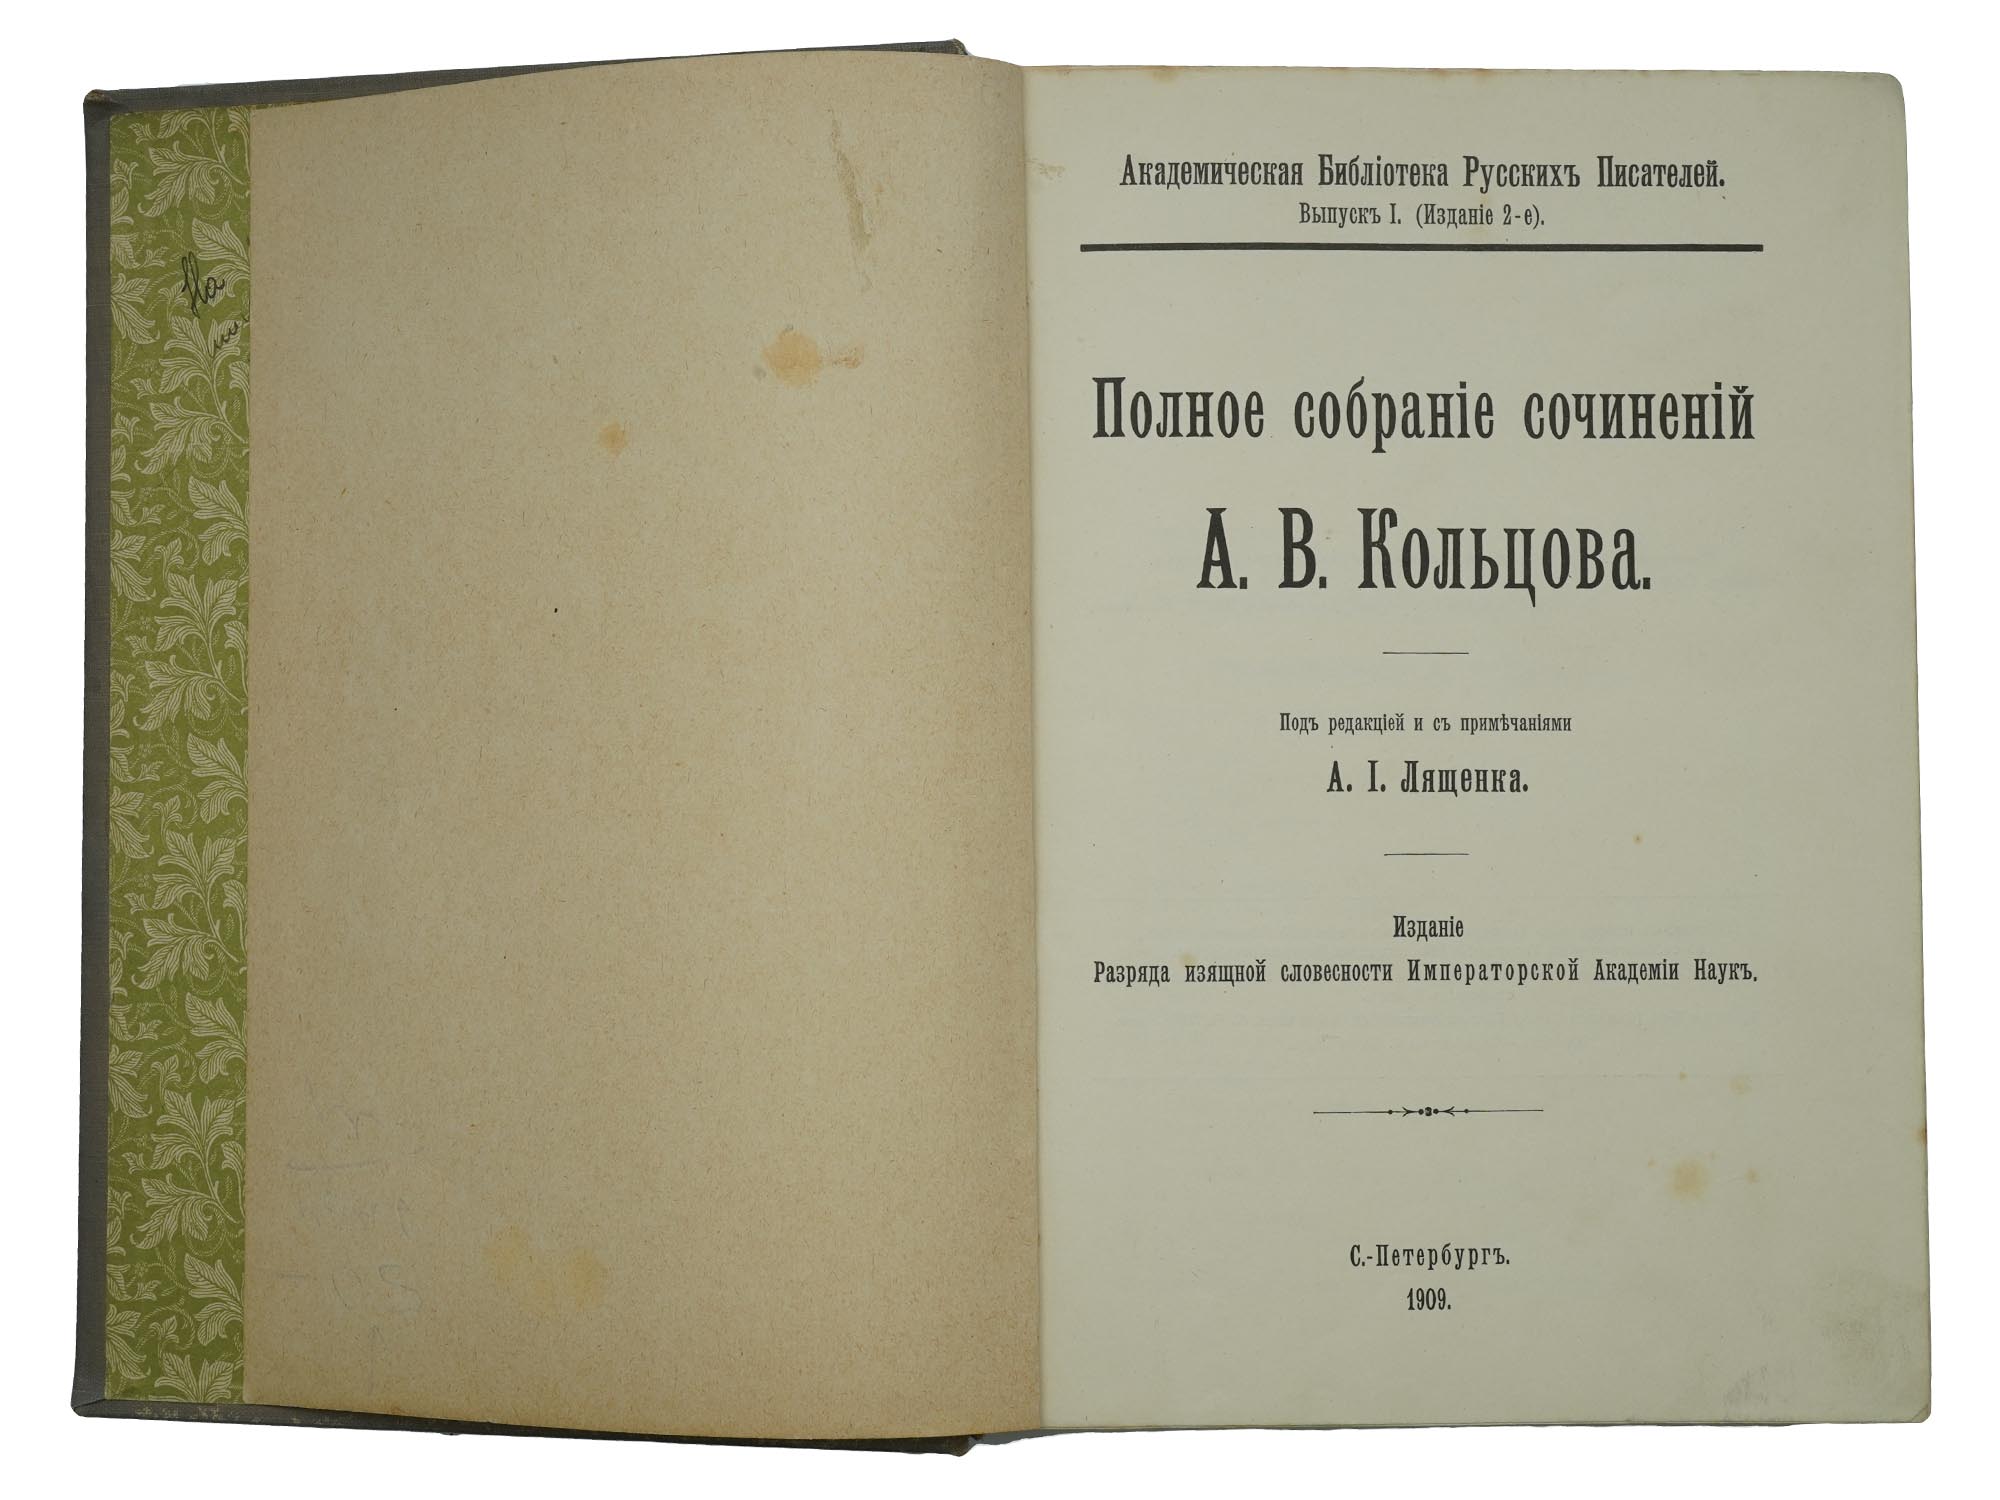 1909 COMPLETE WORKS OF ALEKSEY KOLTSOV VOLUME I PIC-3